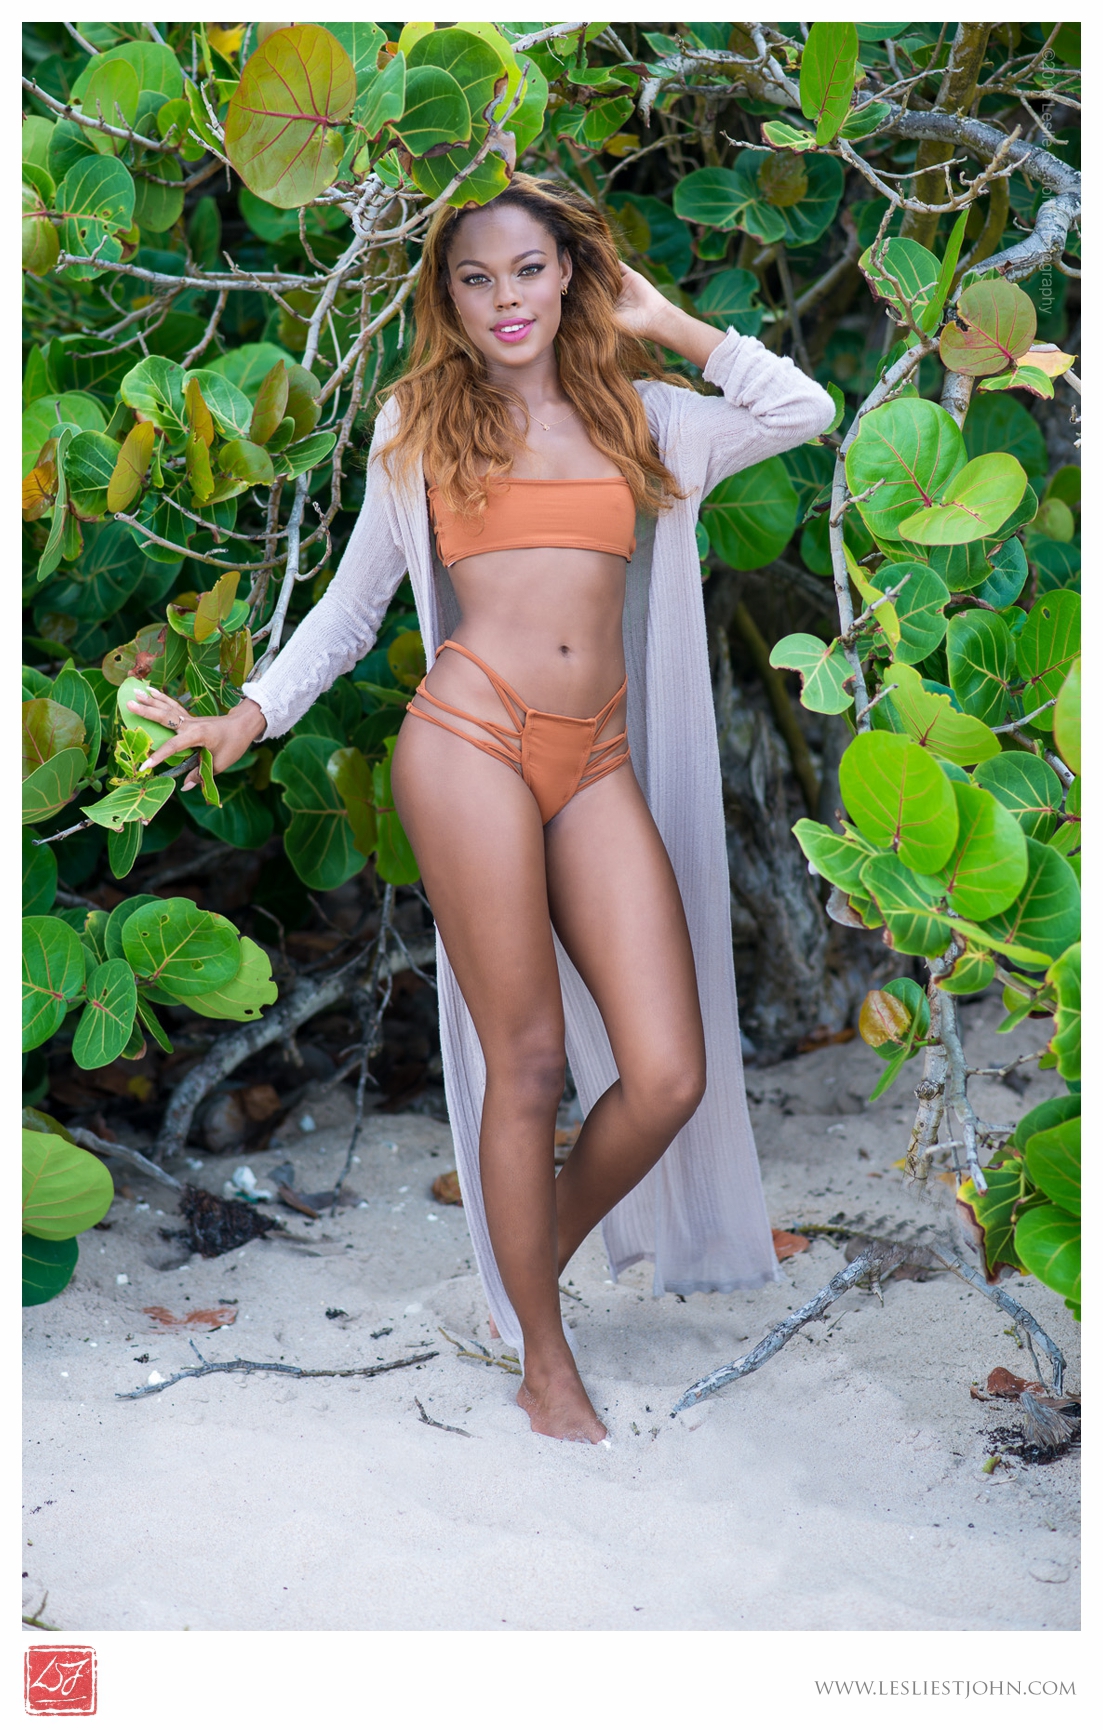 model swimsuit Barbados Caribbean beach bikini